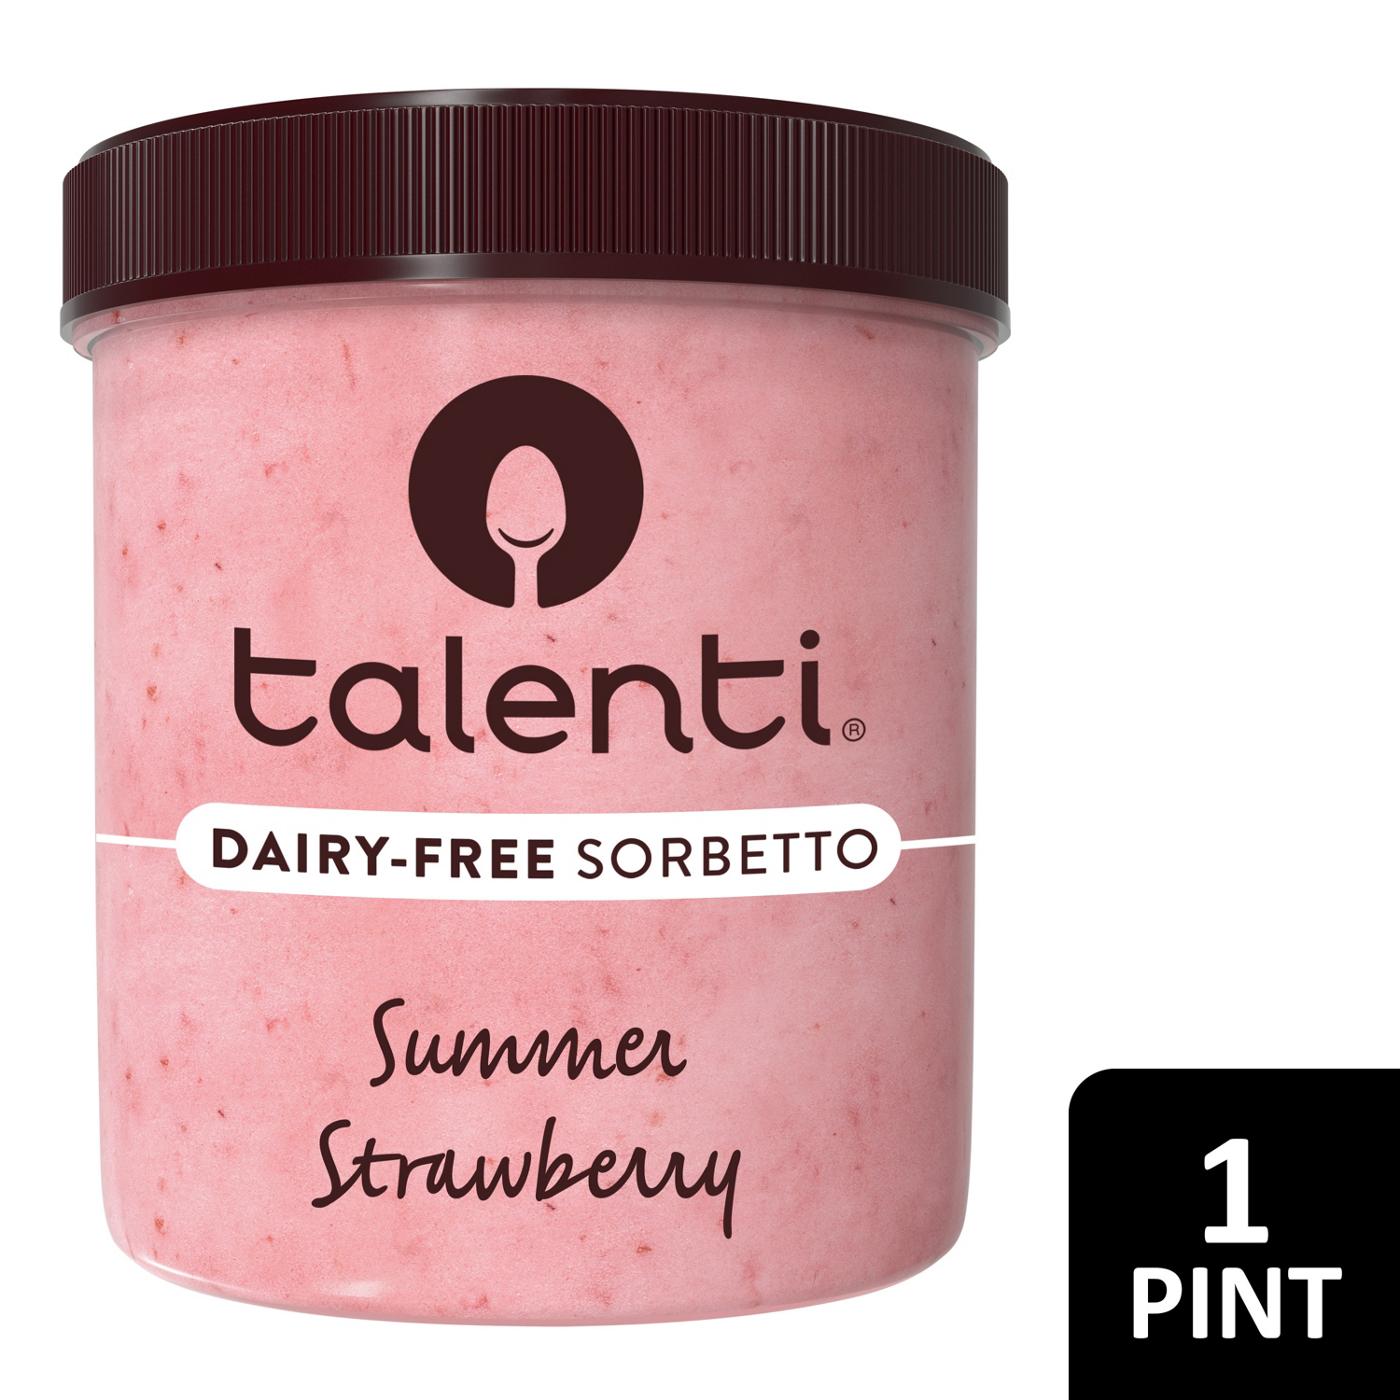 Talenti Summer Strawberry Dairy-Free Sorbetto; image 7 of 8